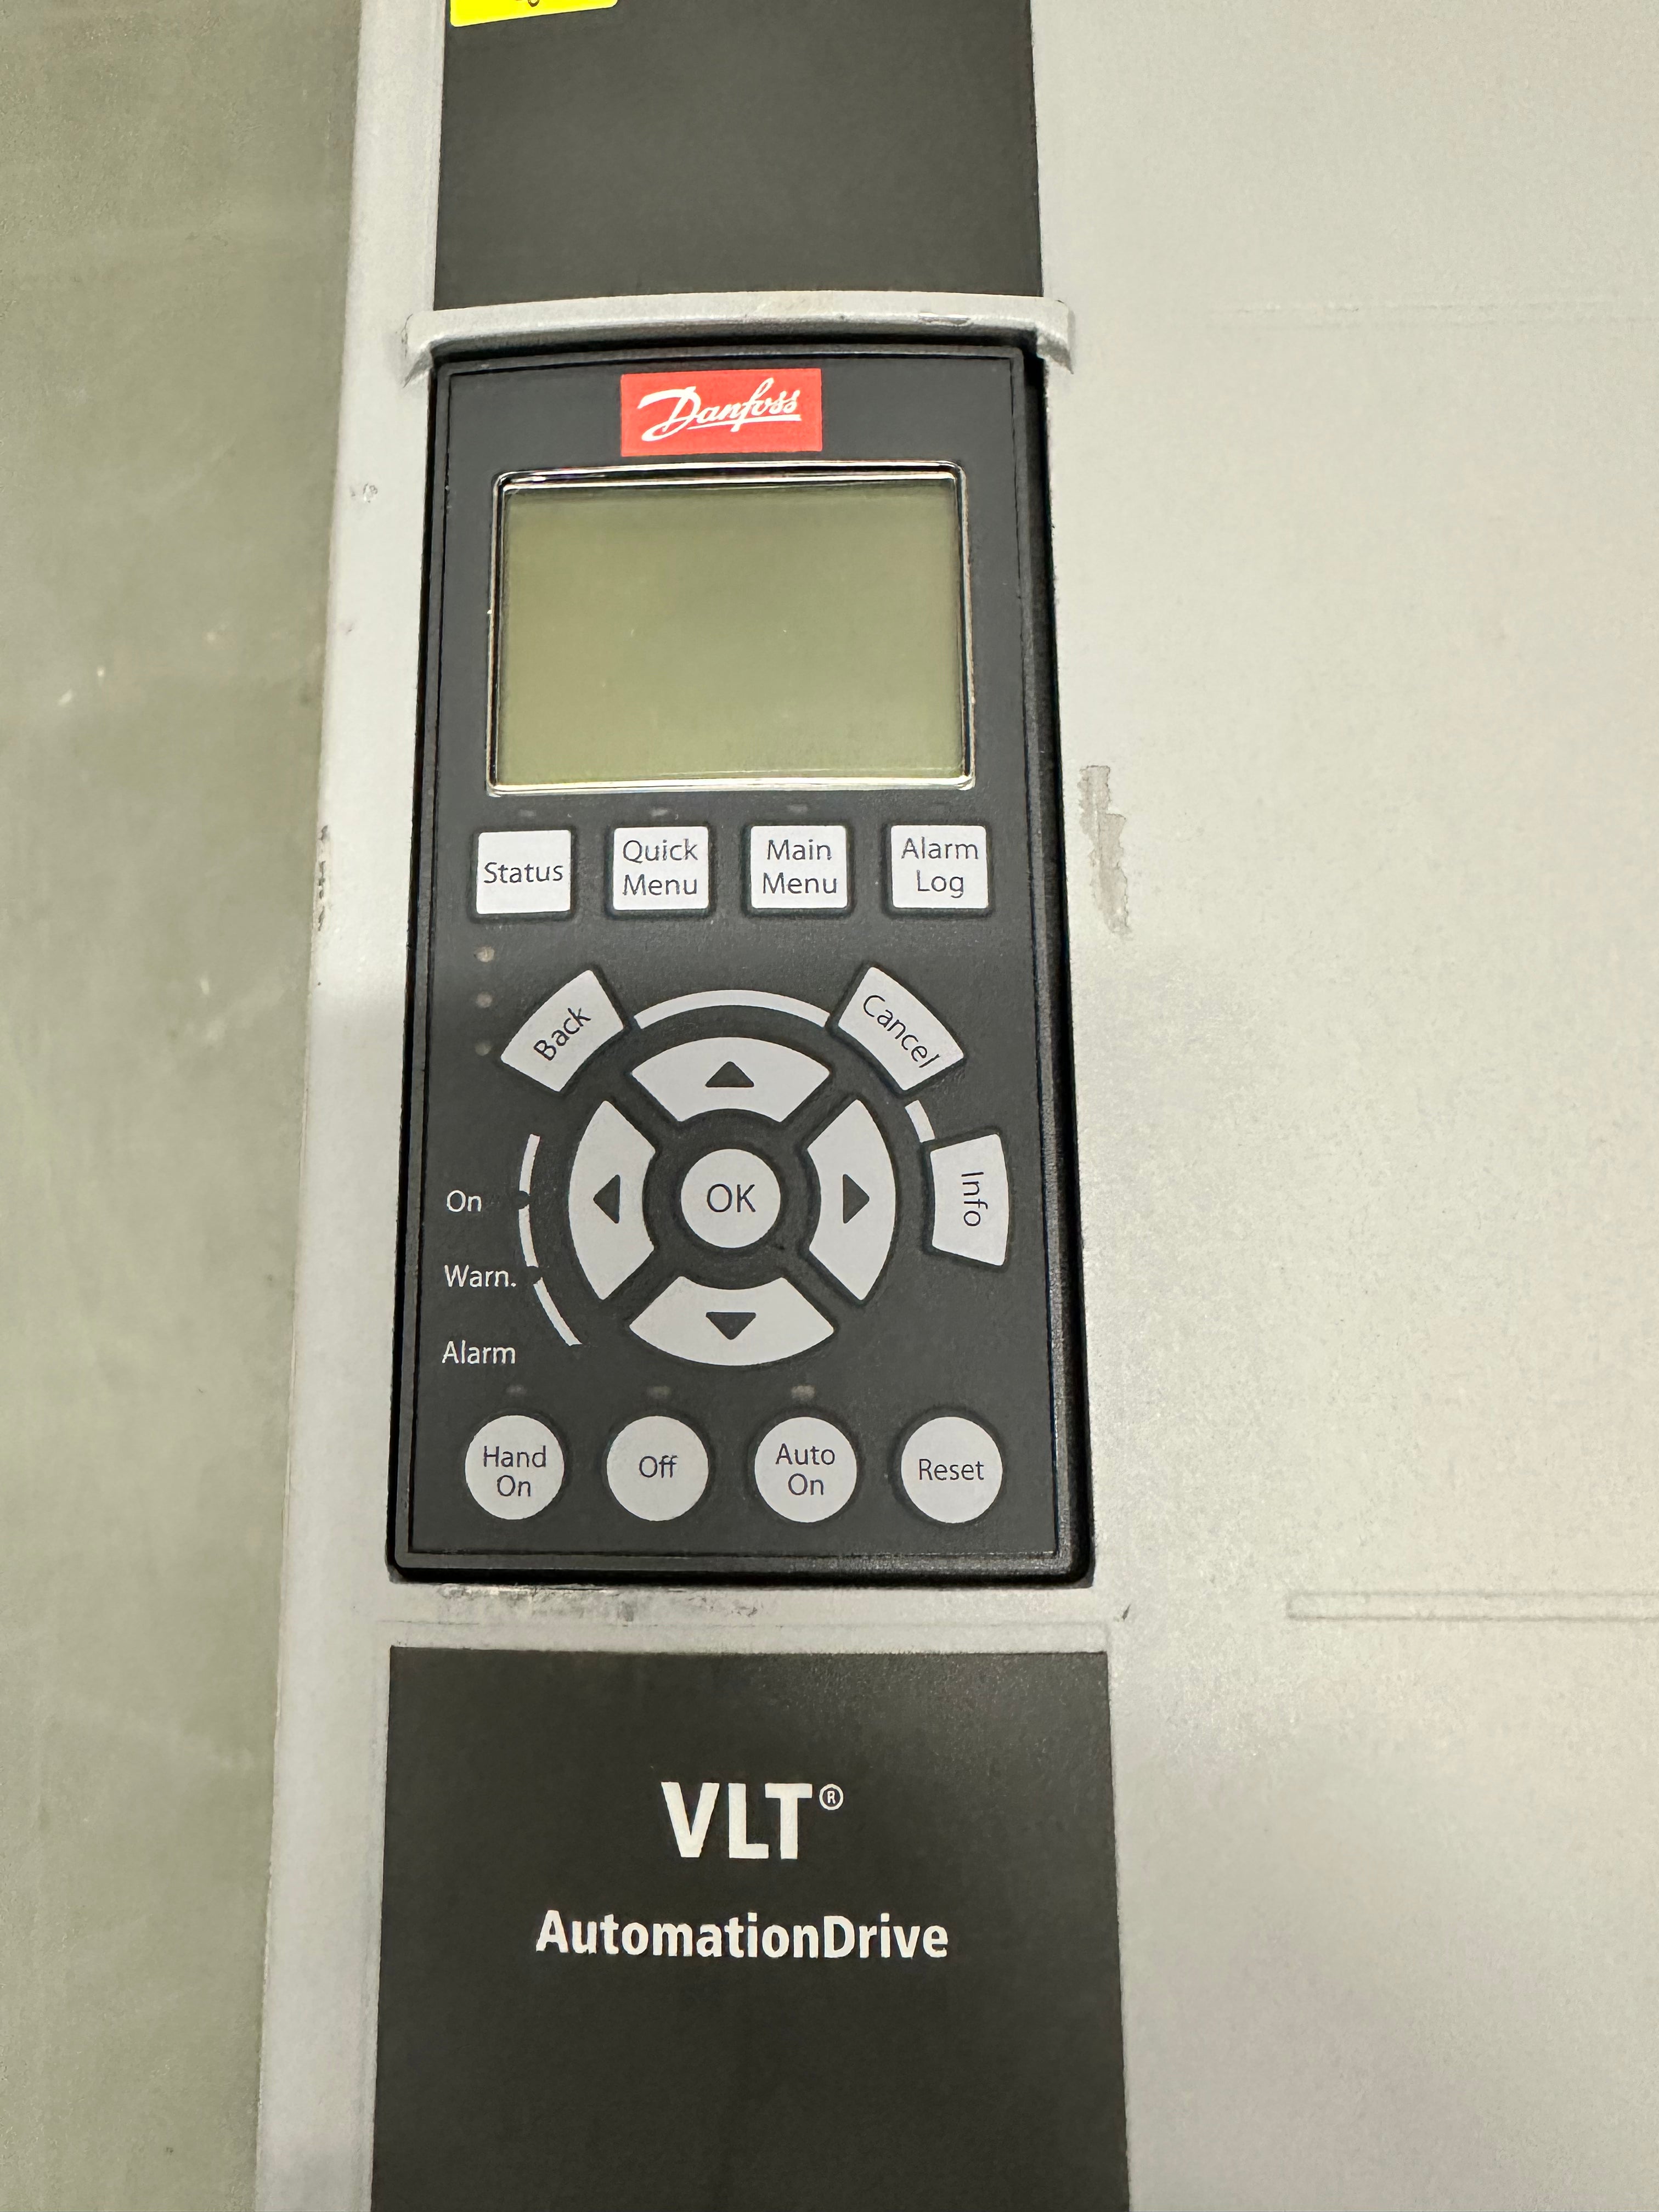 Danfoss frequency inverter VLT® AutomationDrive FC-301